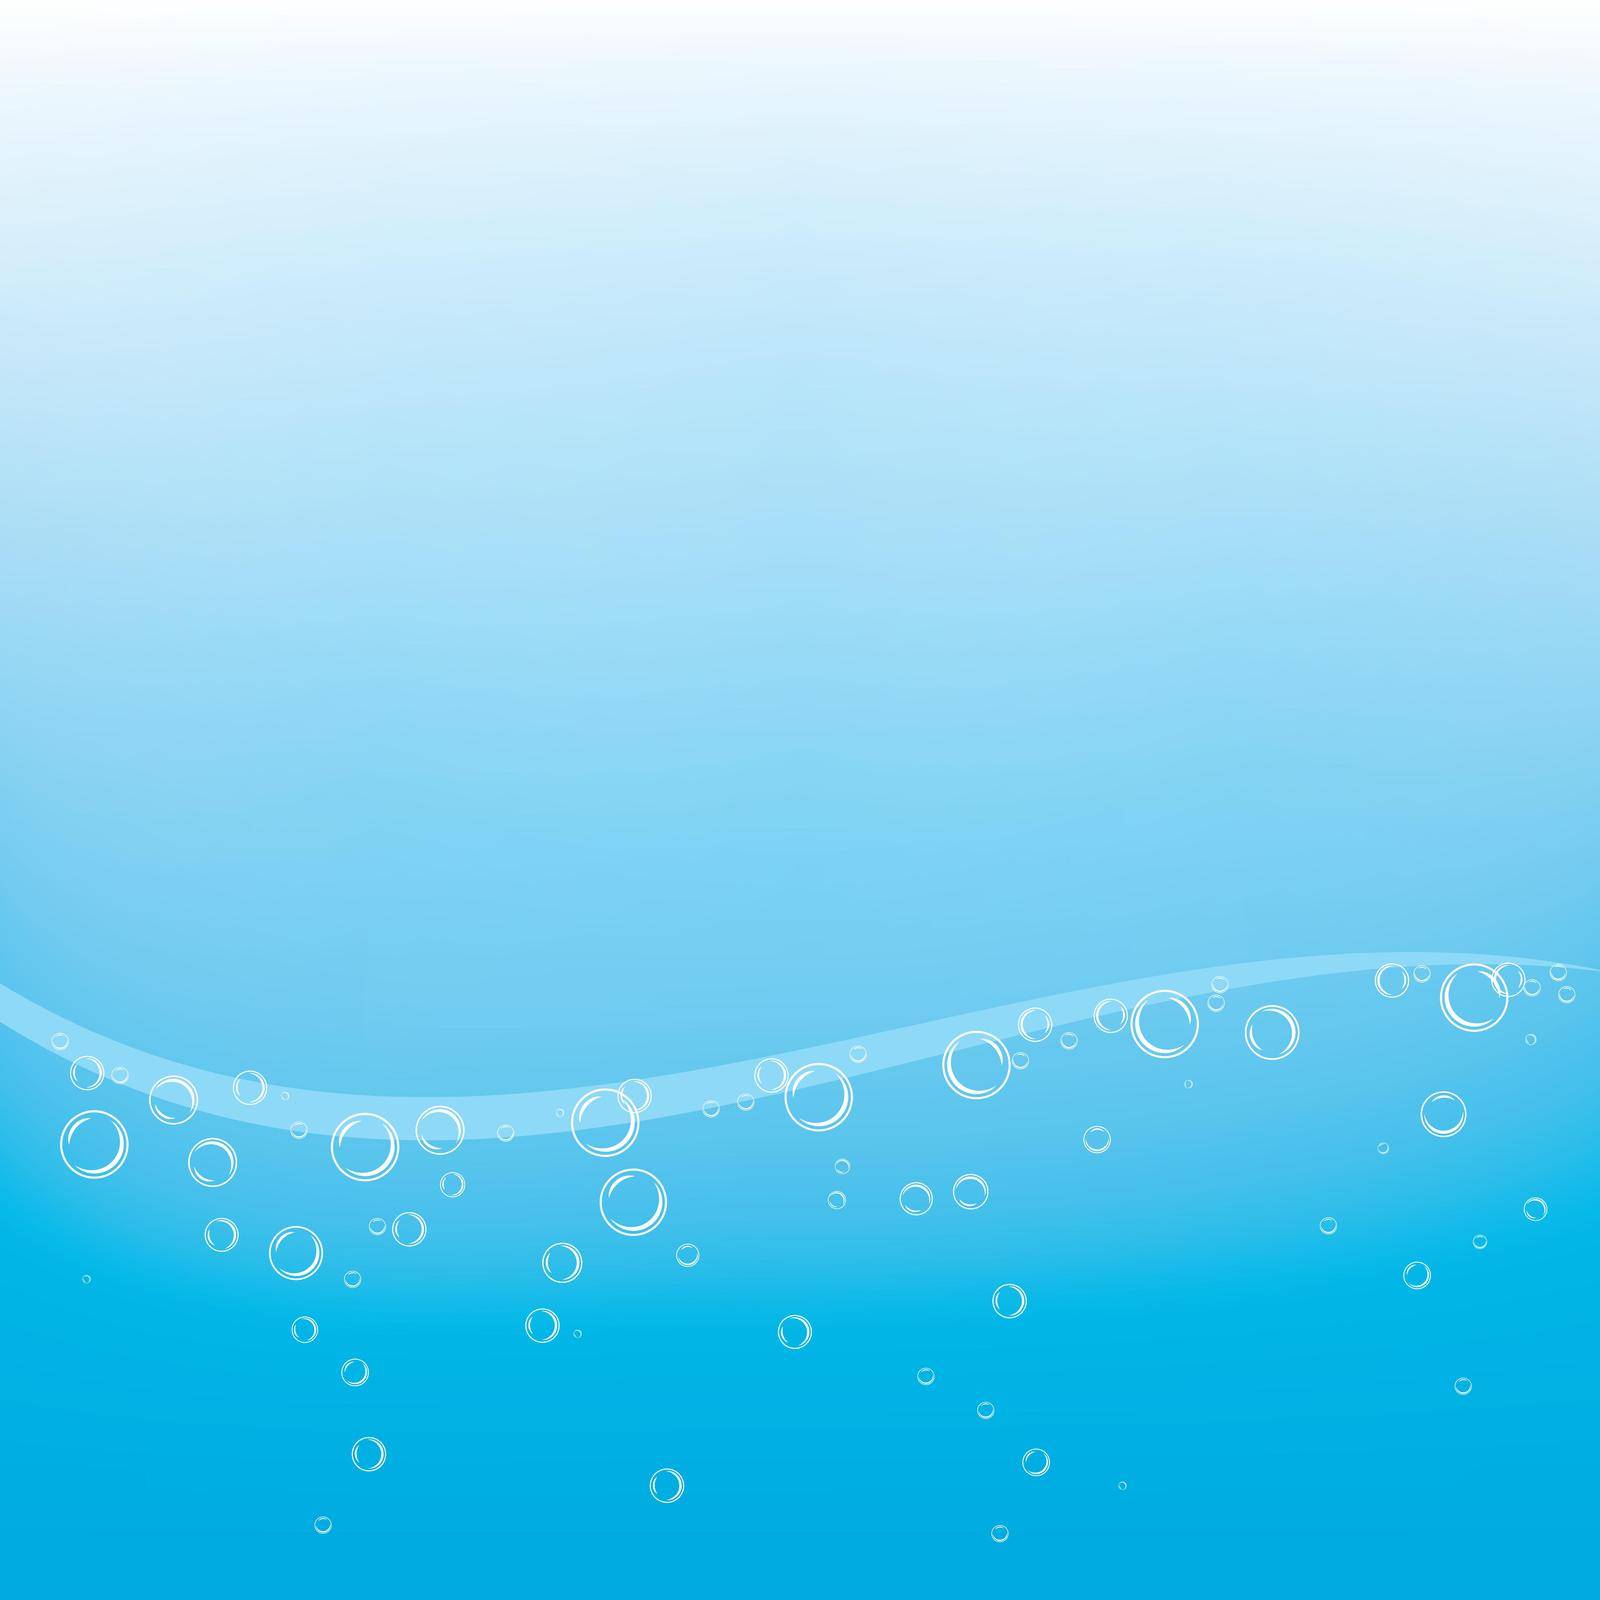 Natural realistic water bubble illustration vector design